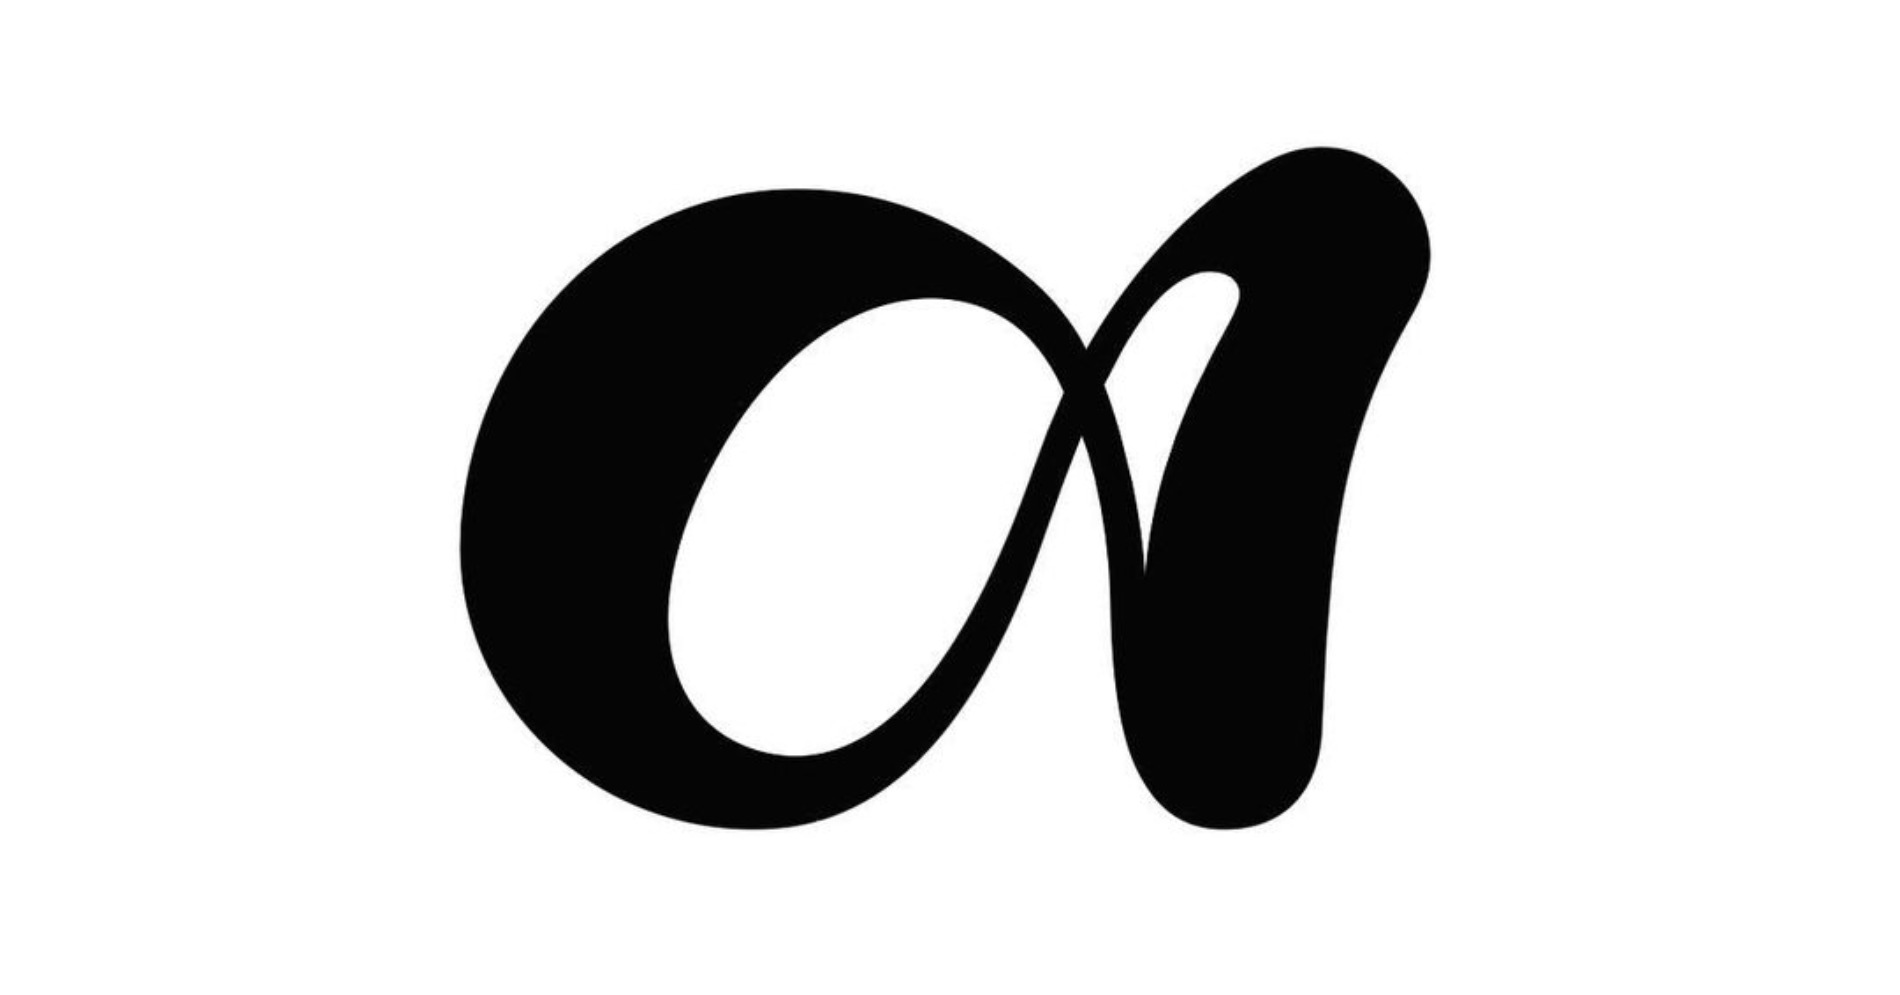 Logo OA Sumber gambar: tangkapan layar laman akun IG Jennie Ruby Jane